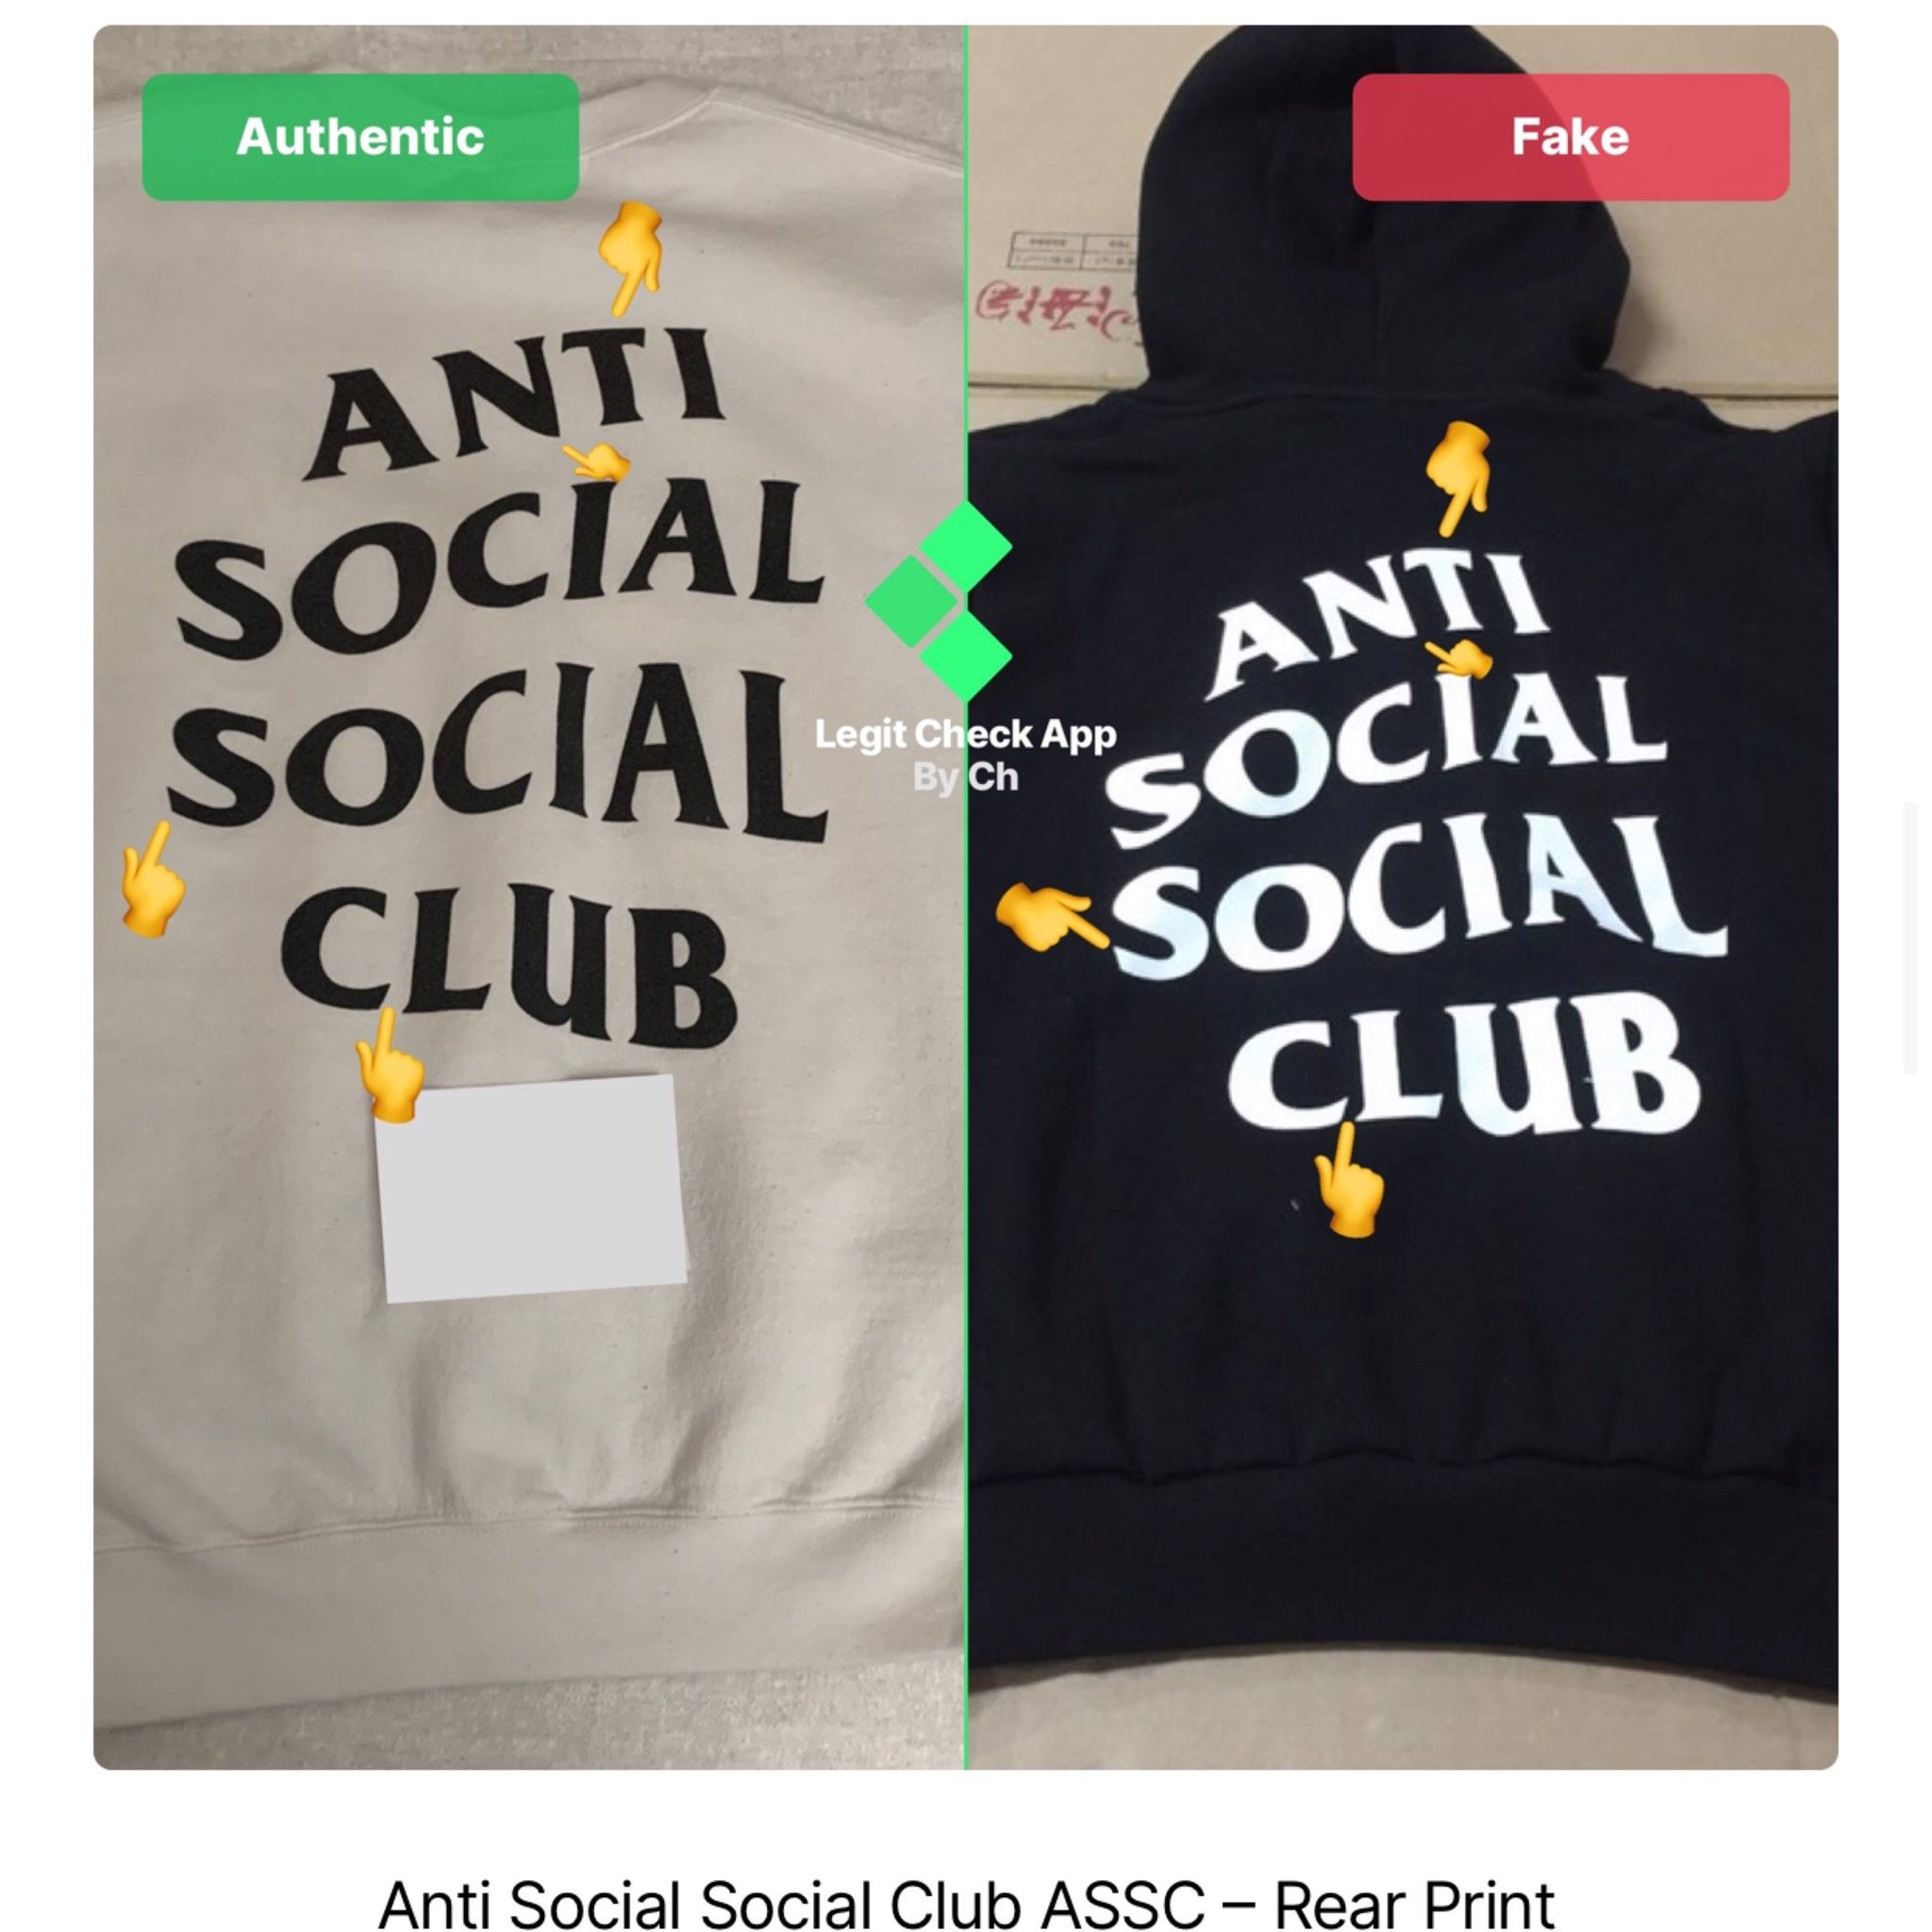 legitcheck-cach-phan-biet-logo-anti-social-social-club-real-va-fake